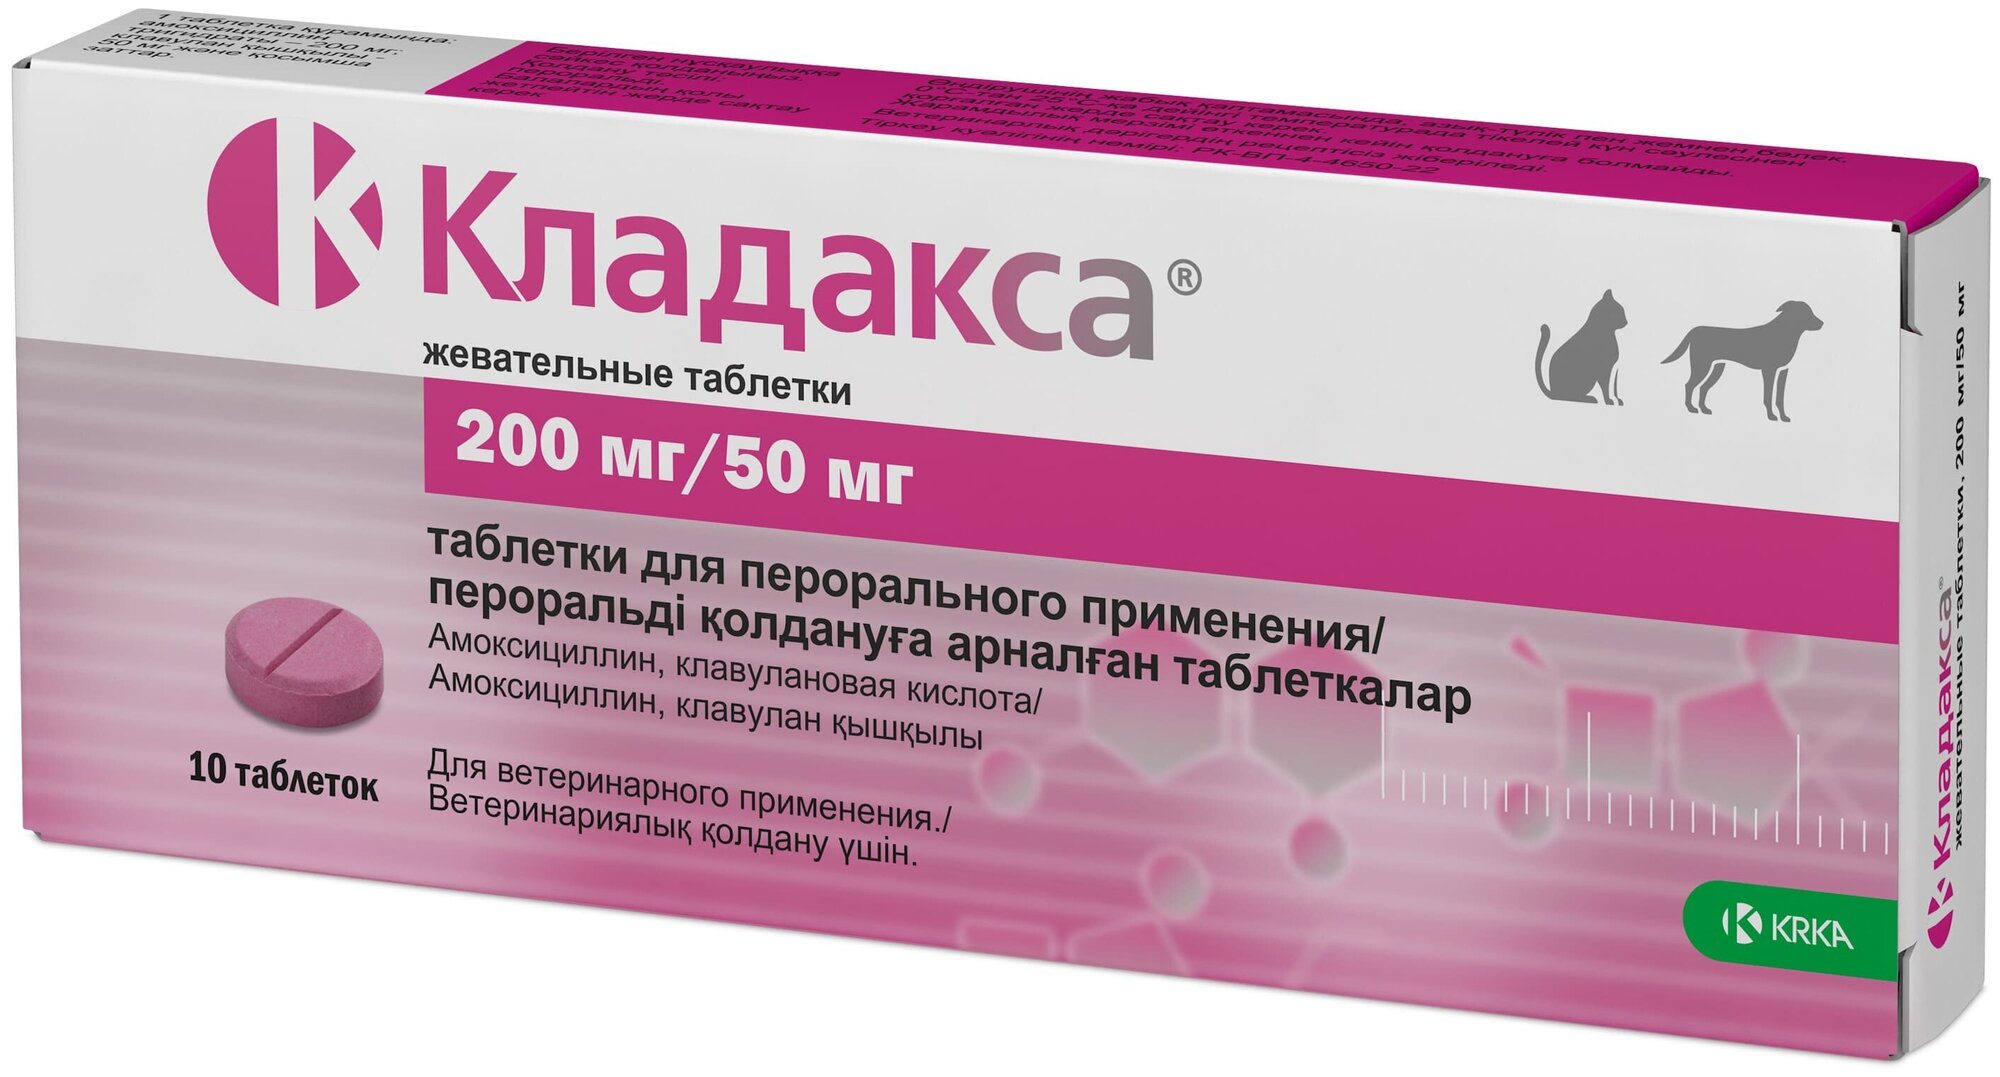 Кладакса® жевательные таблетки 250 мг (200 мг/50 мг) 10шт.